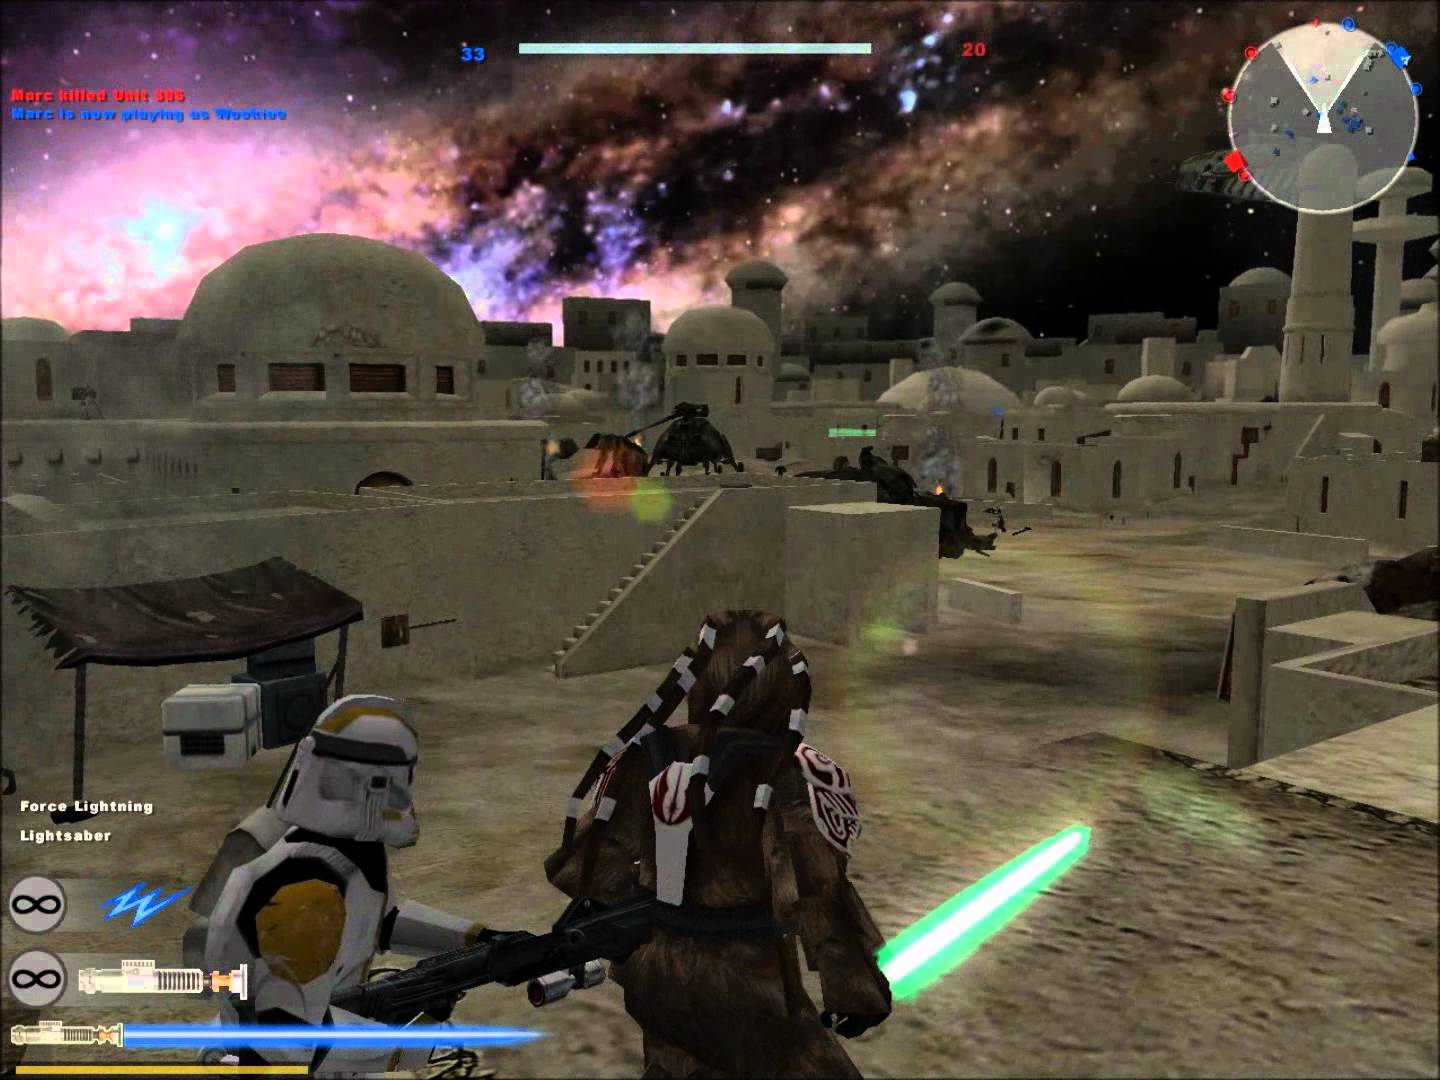 star wars battlefront 2 the old republic mod